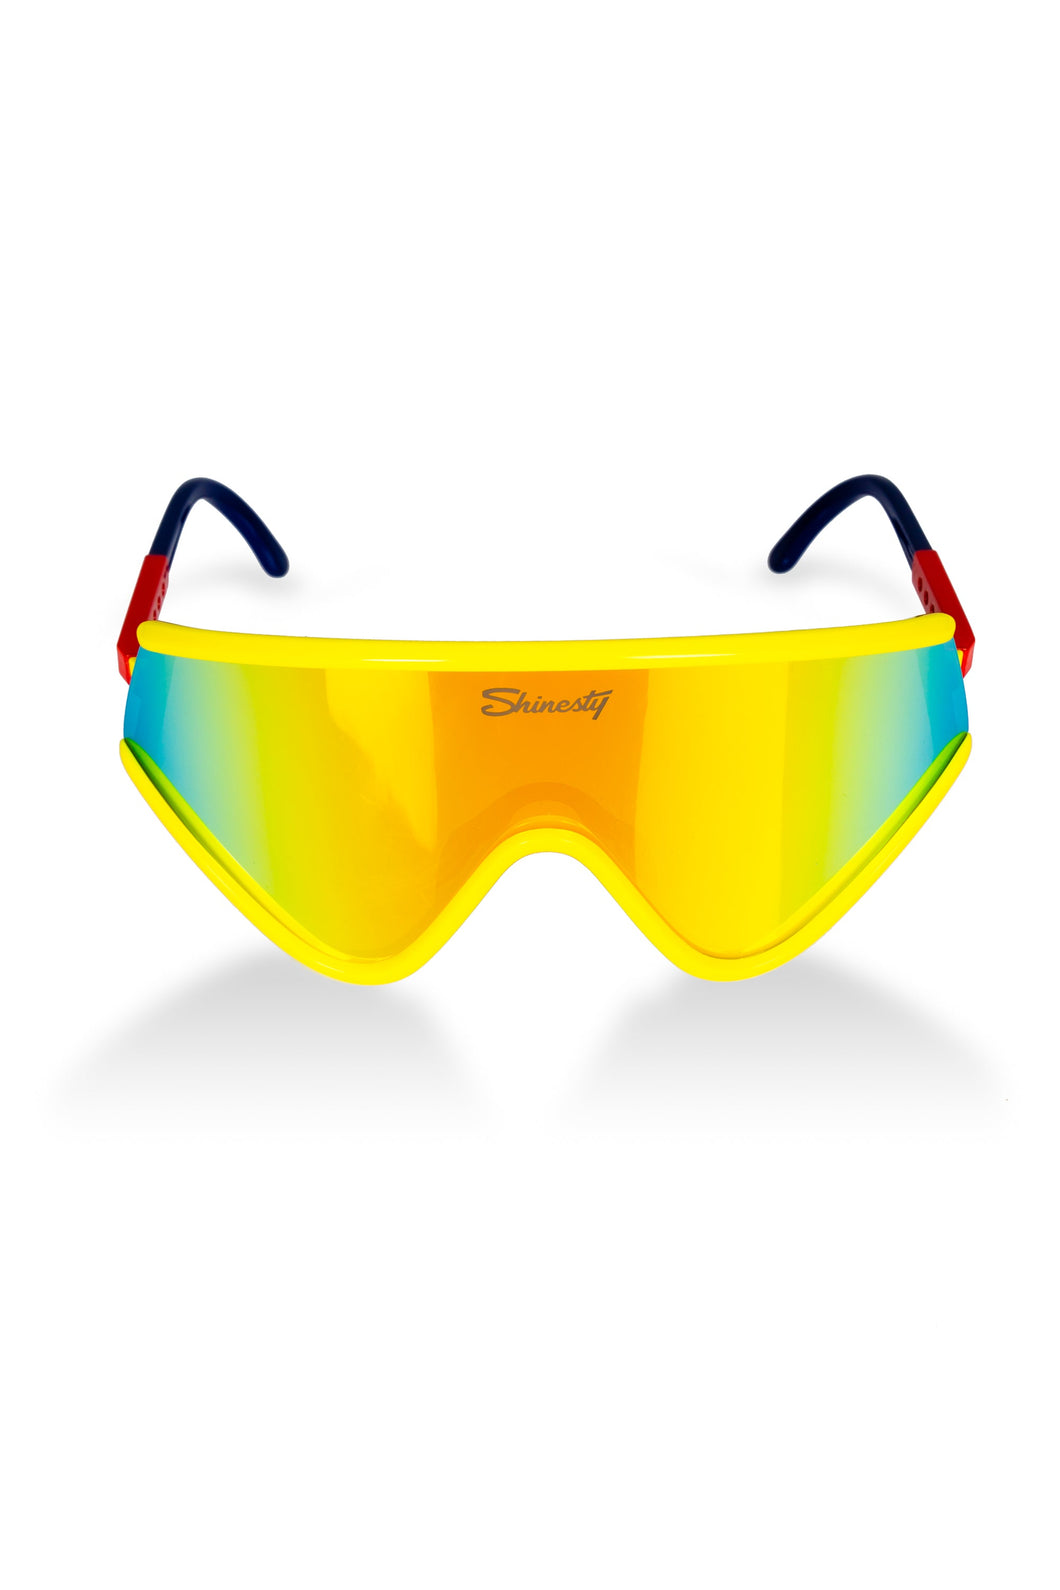 The Revo | Yellow and Red Mirrored Macho Polarized Sunglasses